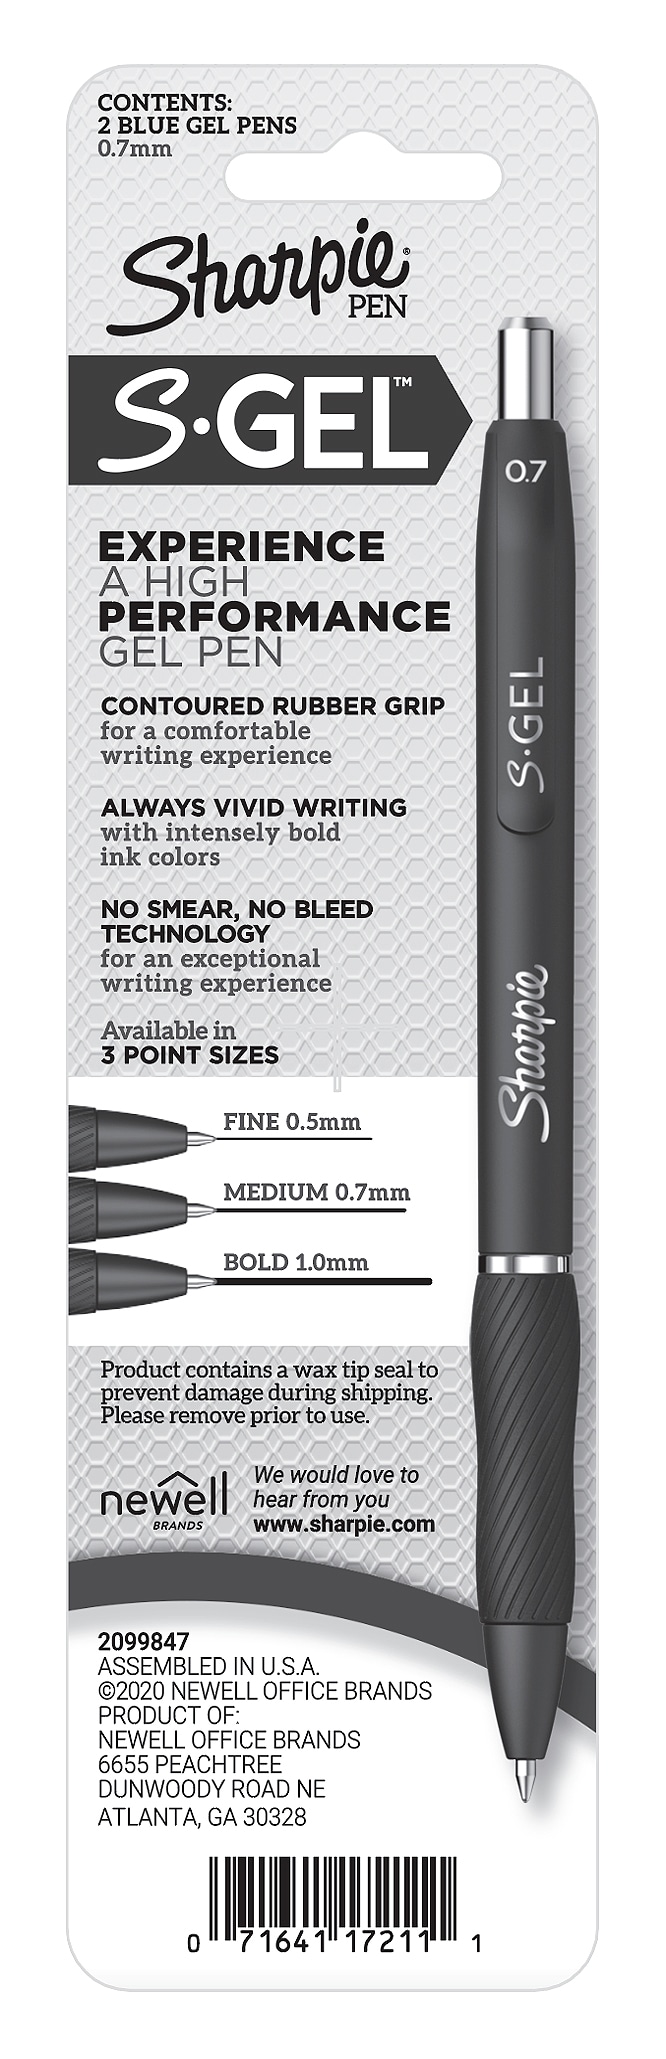 Sharpie Gel 0.7MM 2CT Blue - Medium Size Gel Pen with No Smear, No